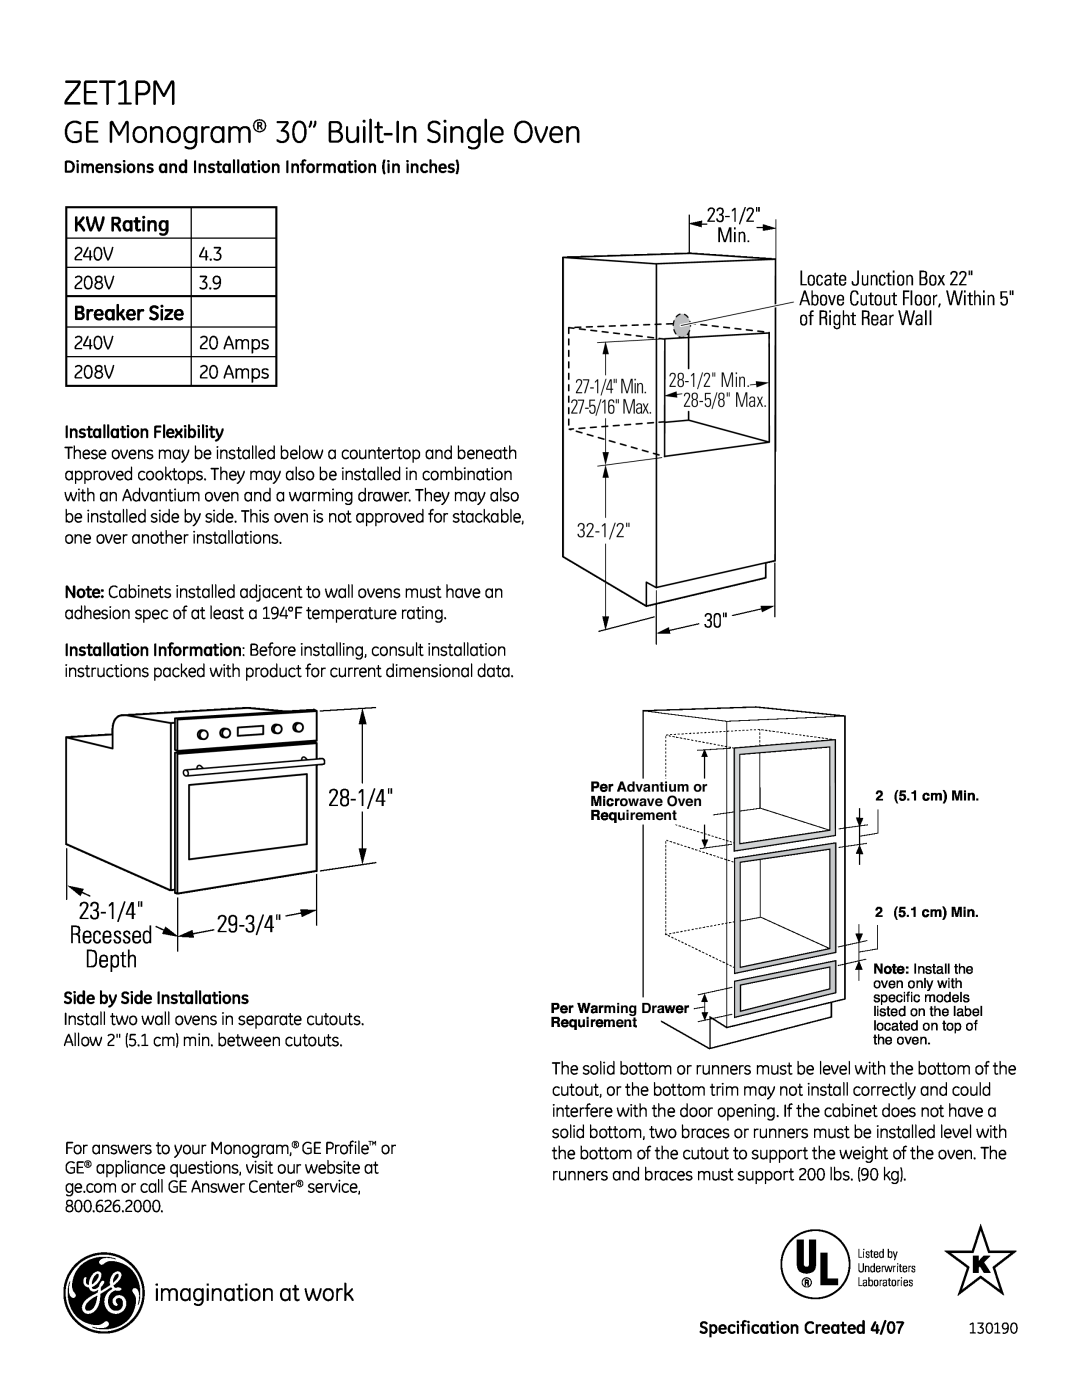 GE ZET1PMSS installation instructions GE Monogram 30” Built-In Single Oven, 28-1/4 23-1/4 29-3/4 Recessed Depth, KW Rating 